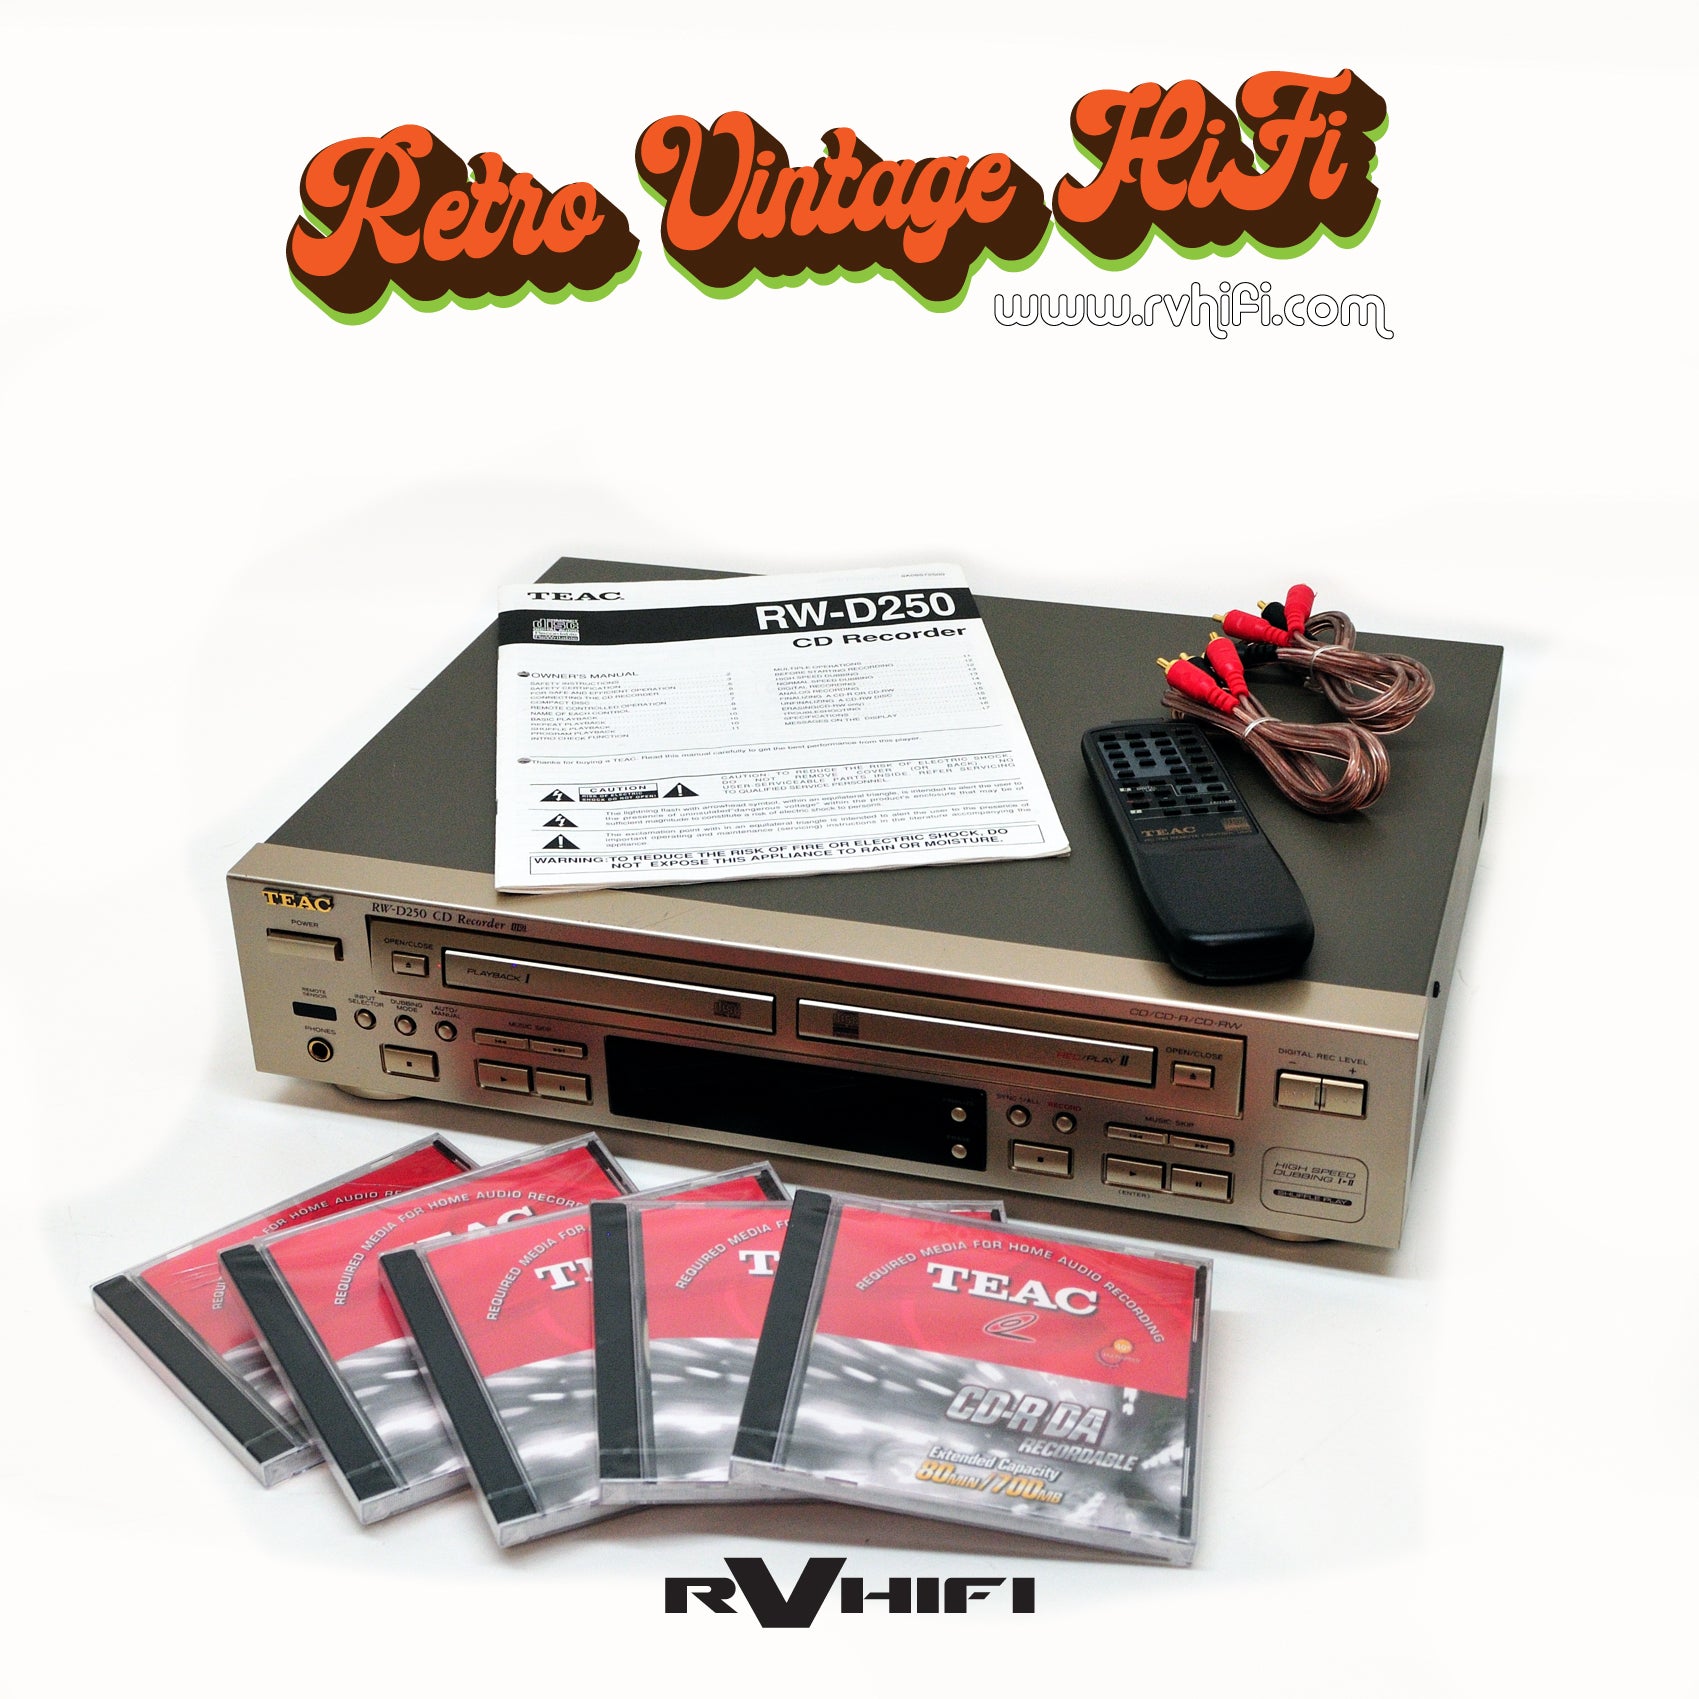 TEAC RW-D250 Compact Disc Recorder